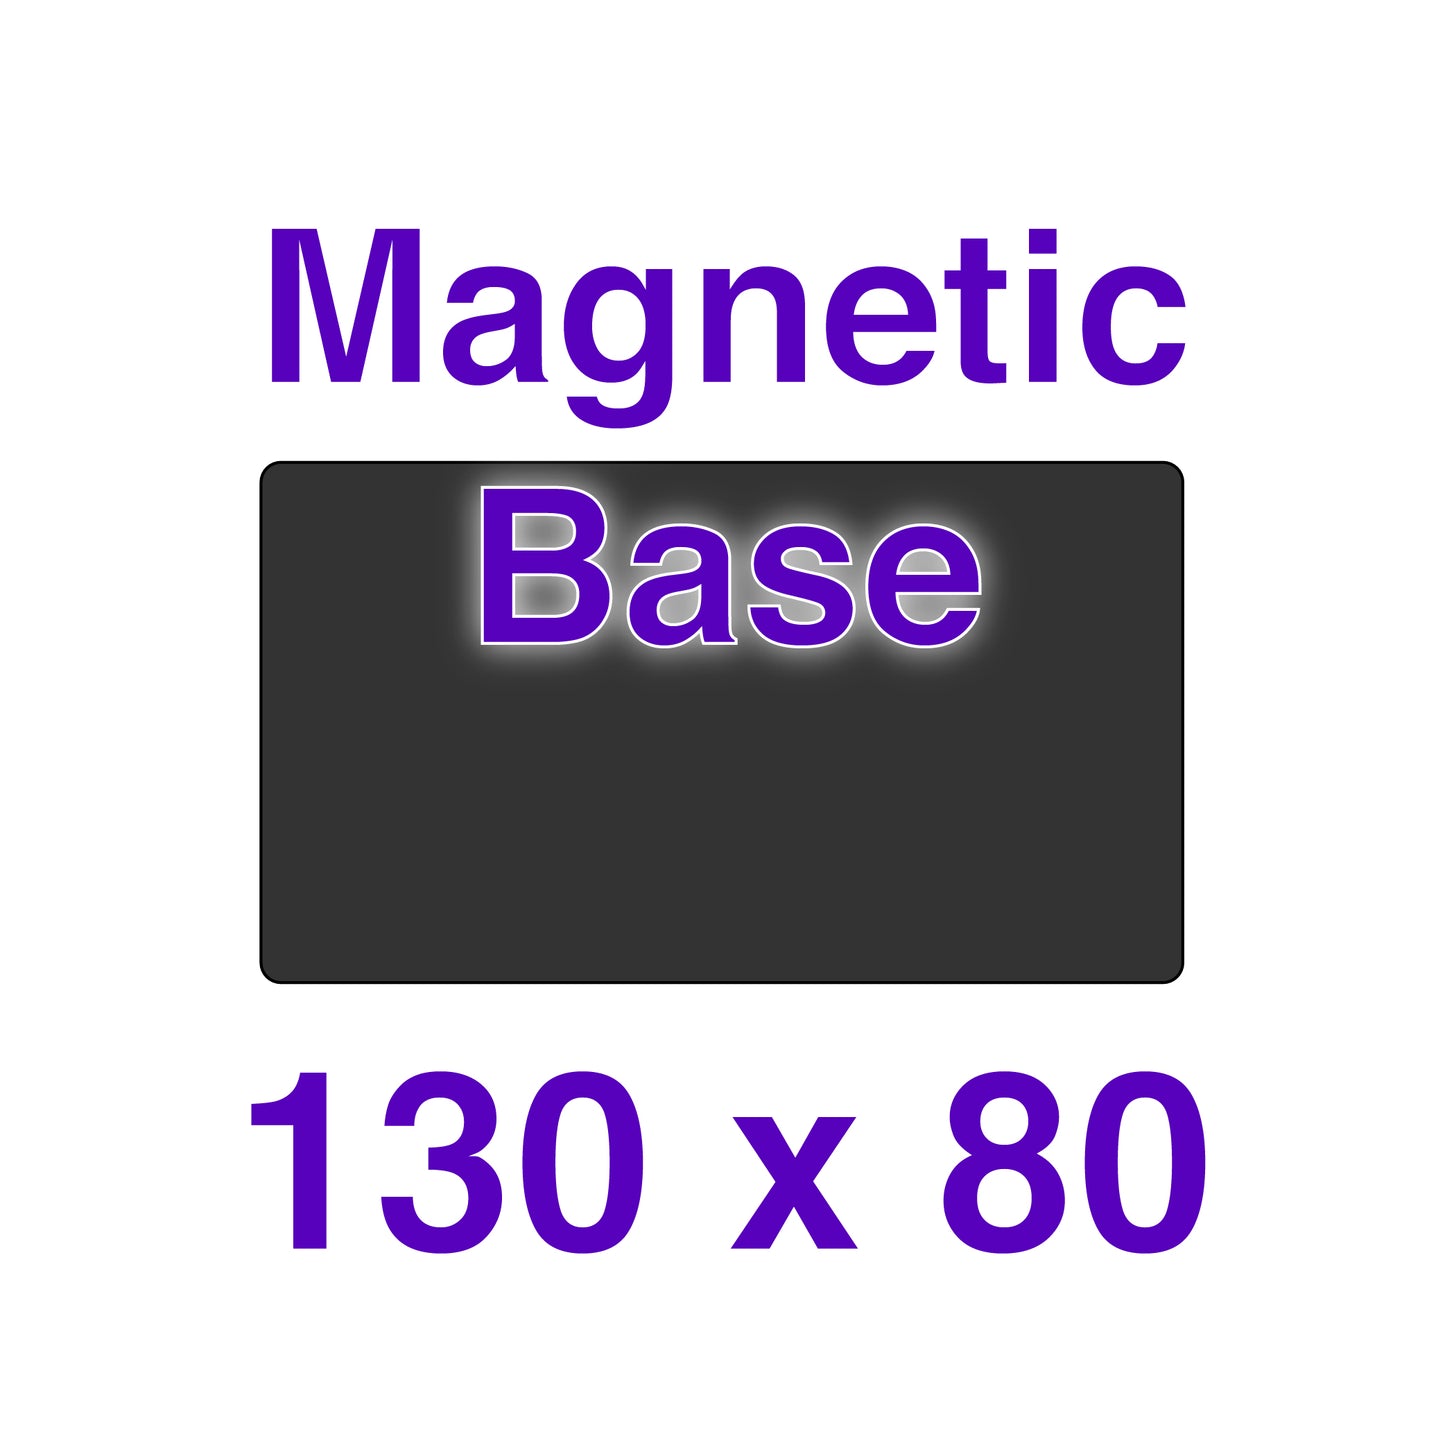 Magnetic Base - 130 x 80